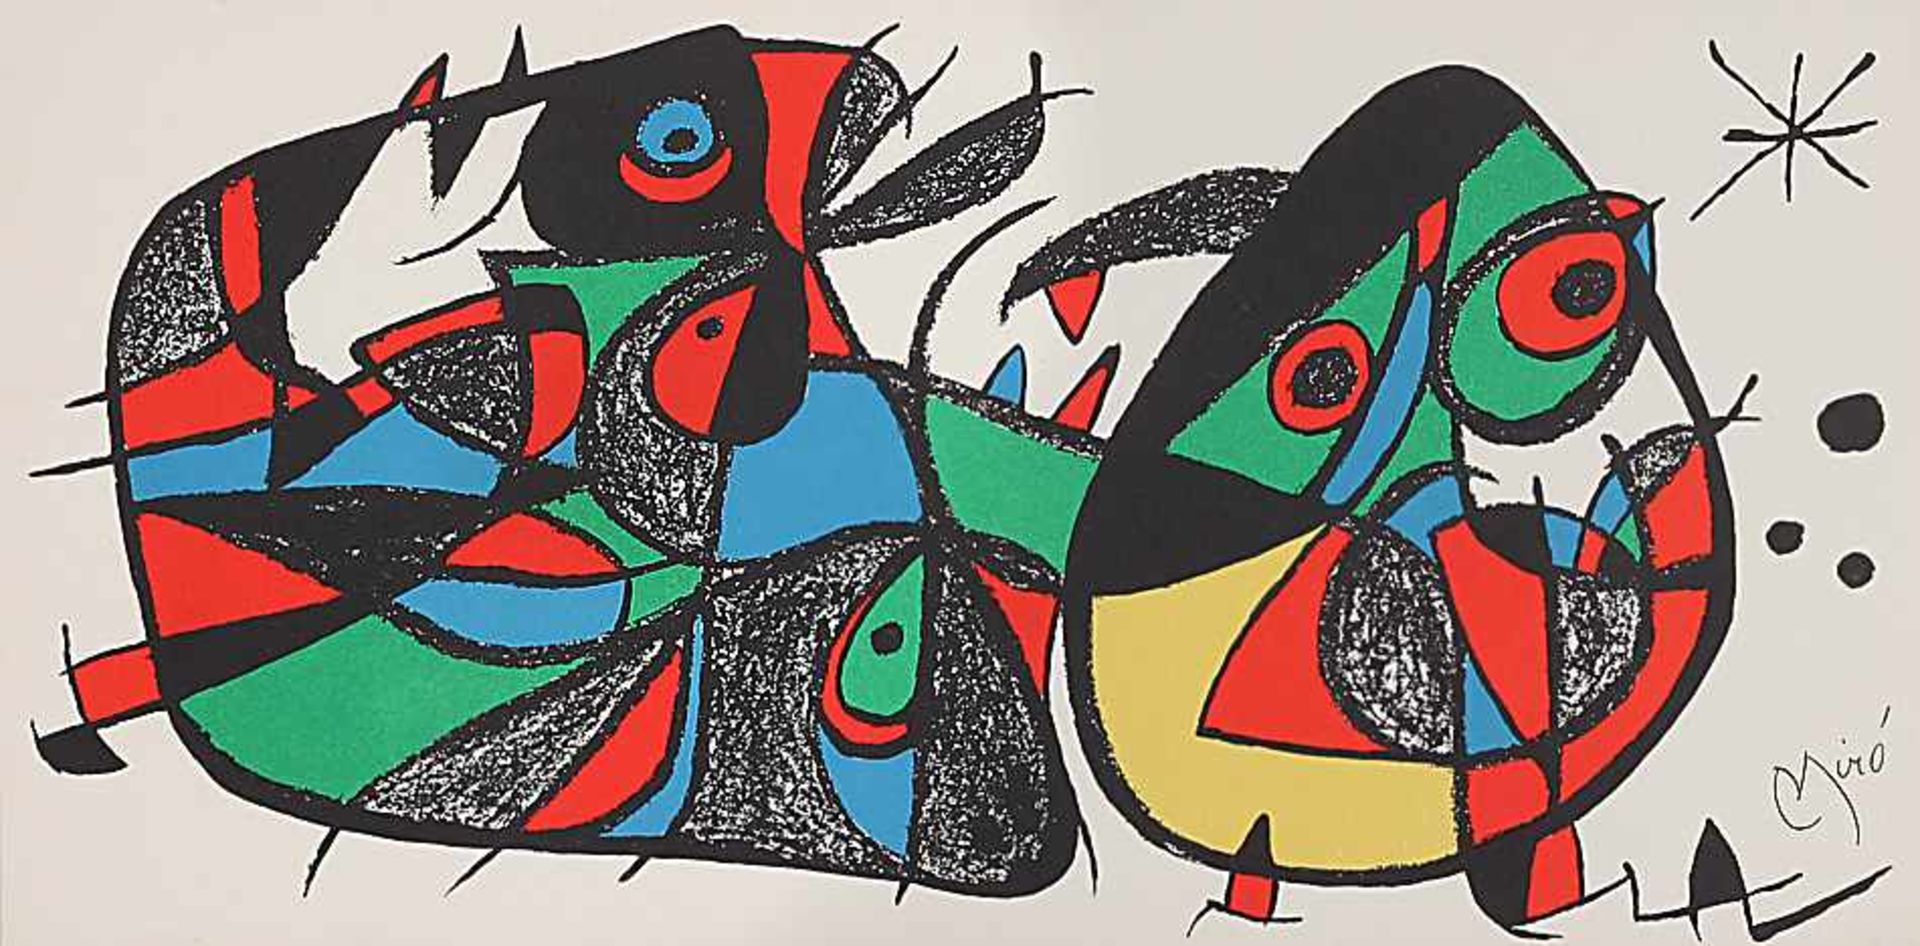 Miró, Joan1893 Montroig/Tarragona - 1983 Calamajor/Mallorca; katal. Maler, Bildhauer, Grafiker, - Bild 2 aus 2